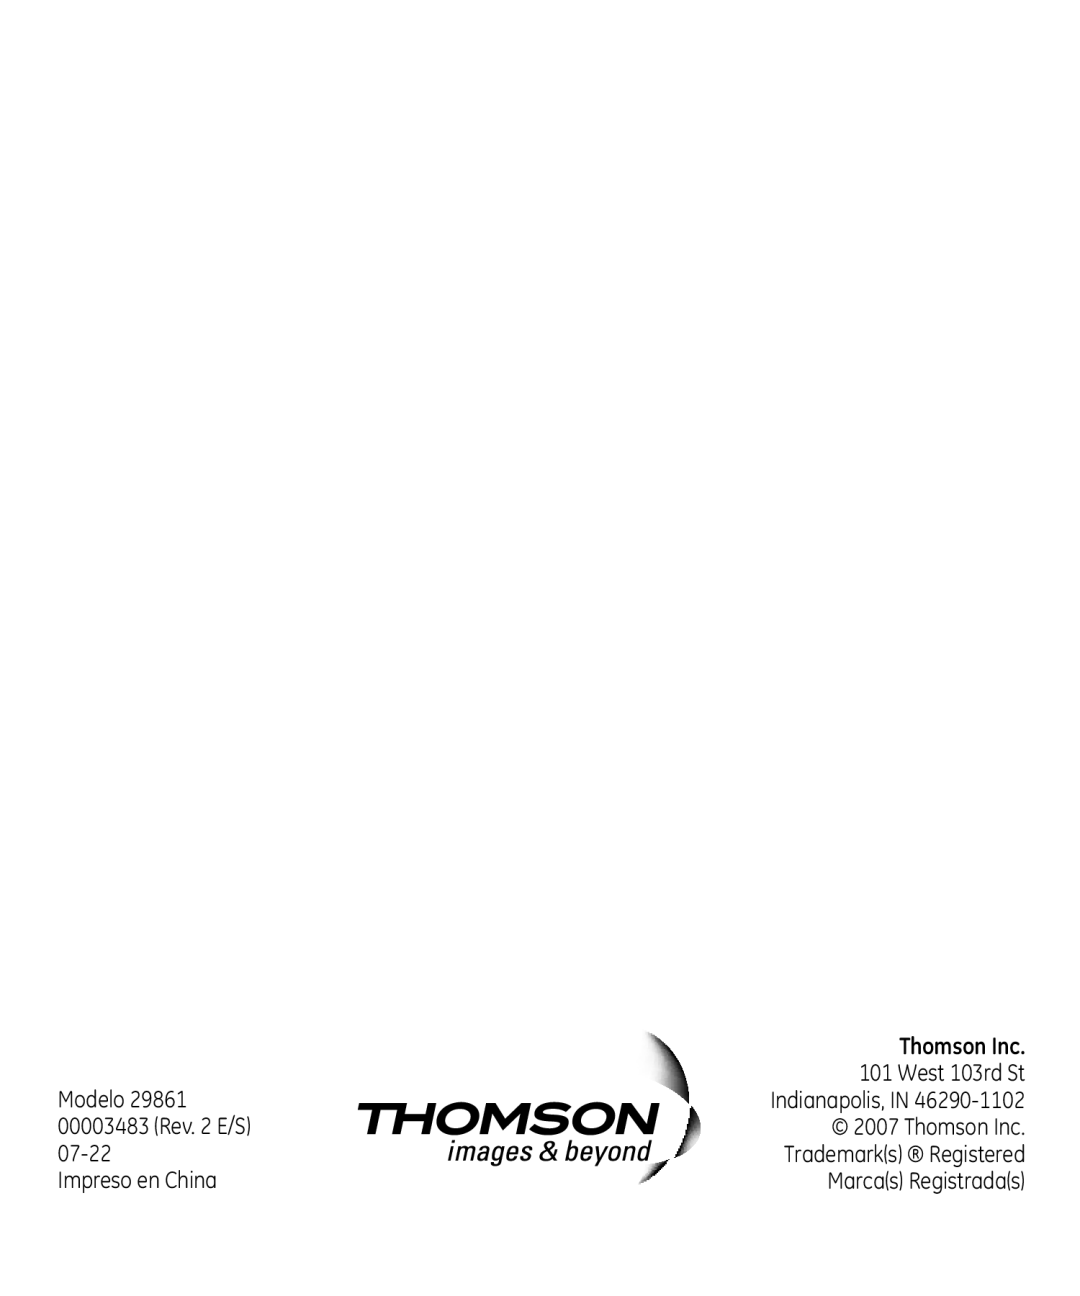 GE 29861 manual Thomson Inc, Modelo, West 103rd St, 00003483 Rev. 2 E/S, 07-22, Impreso en China, Marcas Registradas 